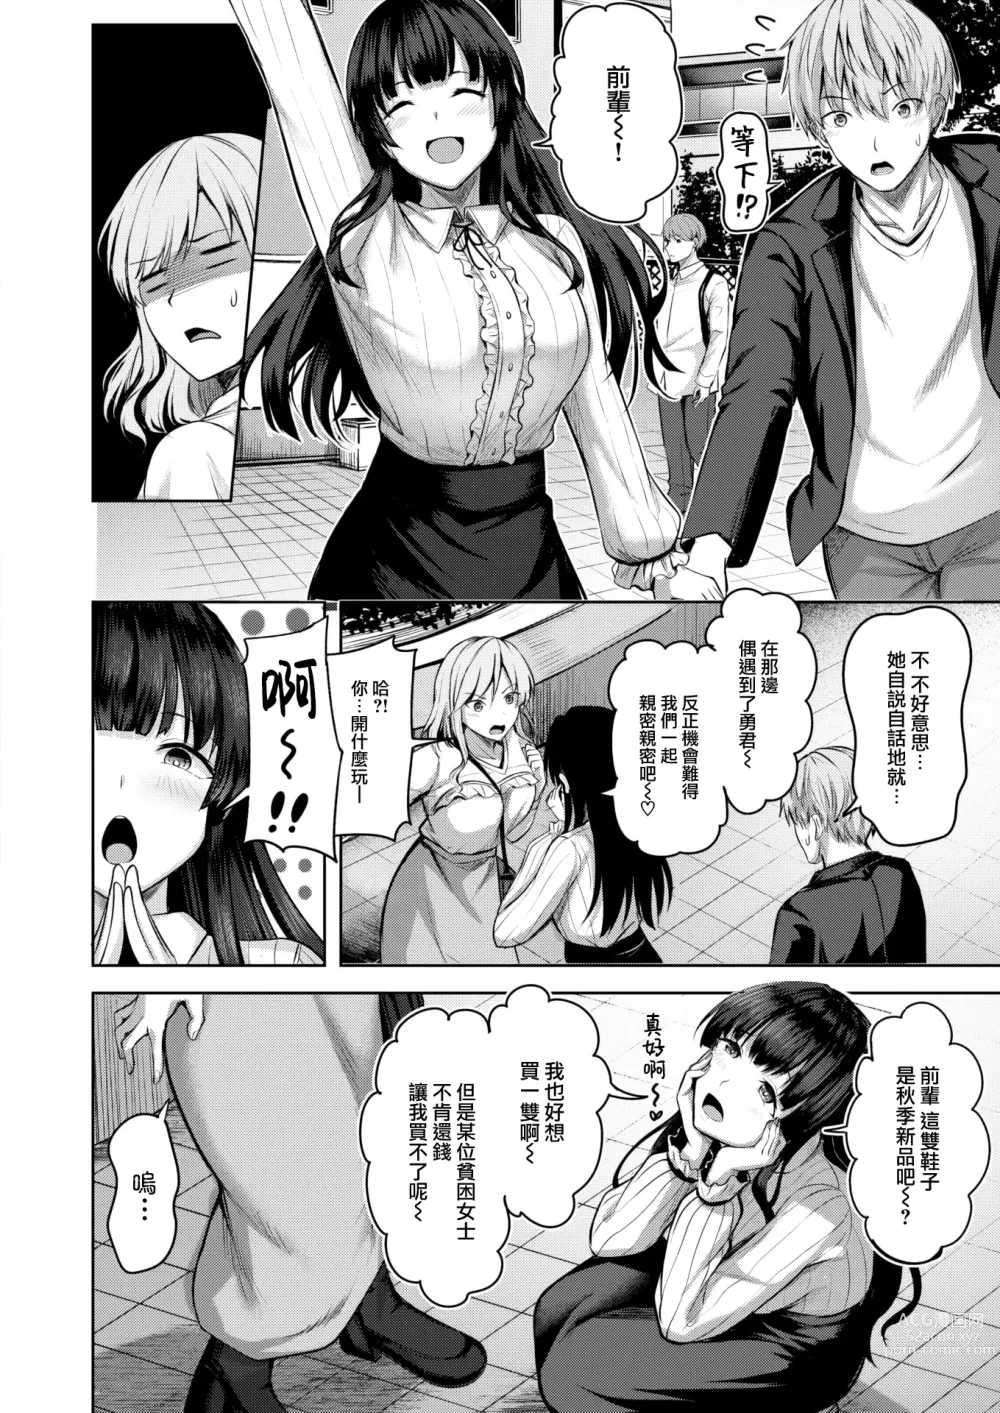 Page 7 of manga Maid@Main